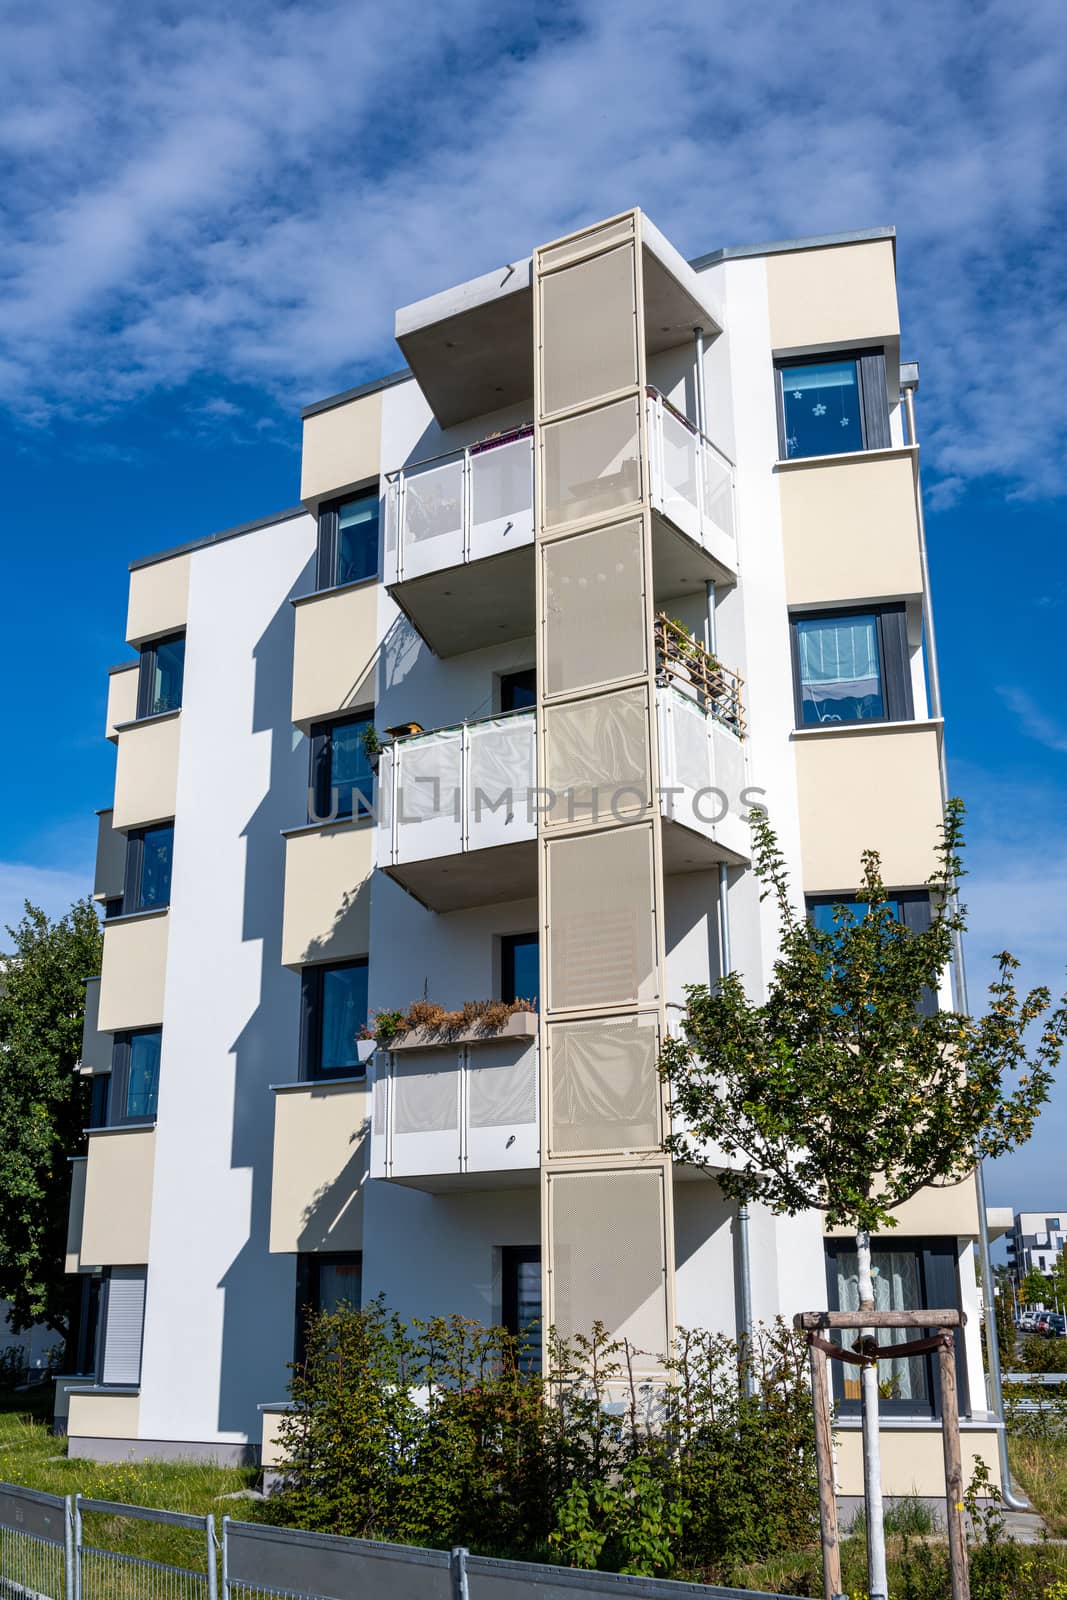 Apartment buildings seen in a housing development area in Berlin